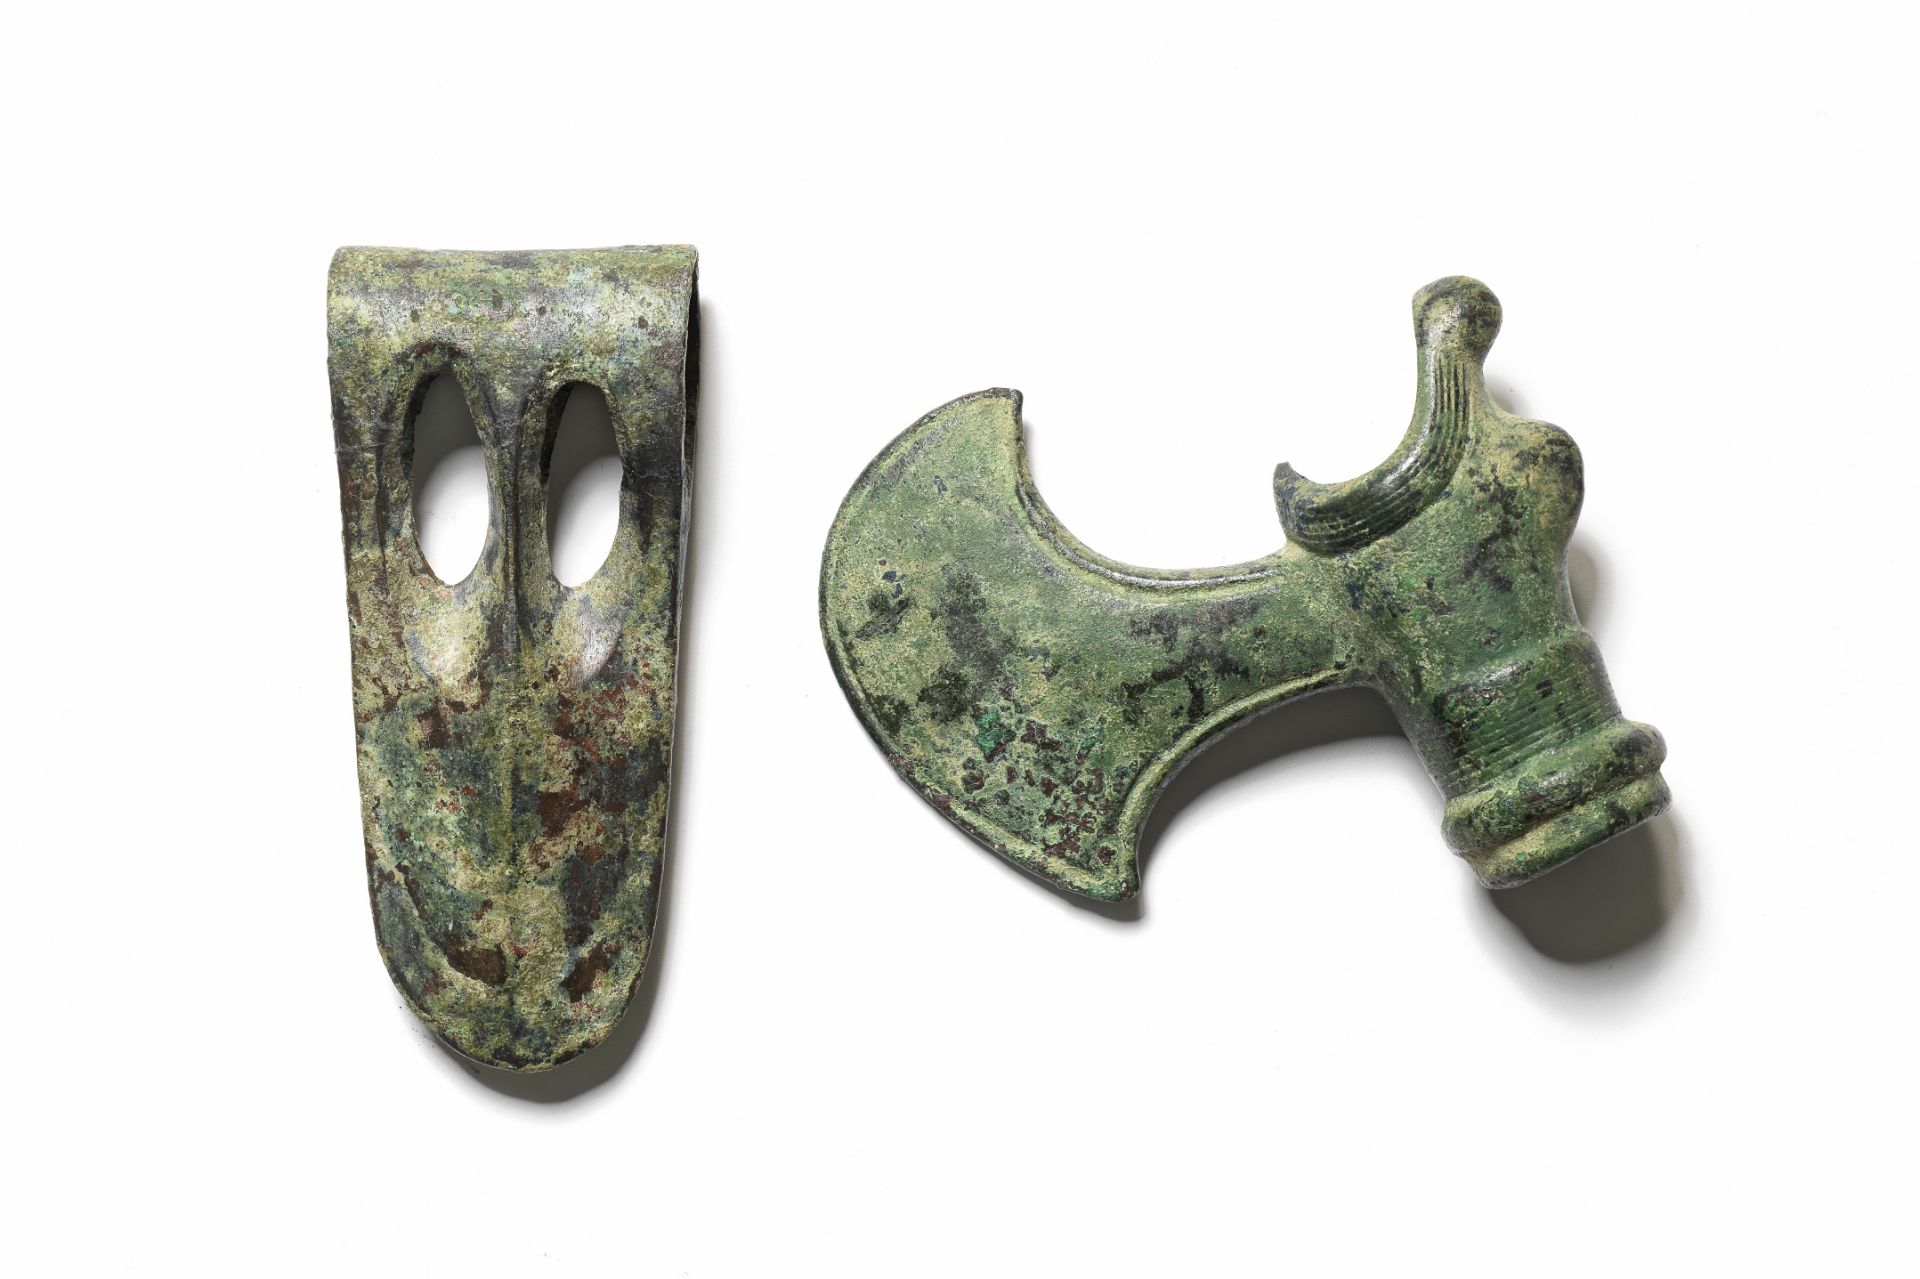 Two Near Eastern bronze axeheads 2